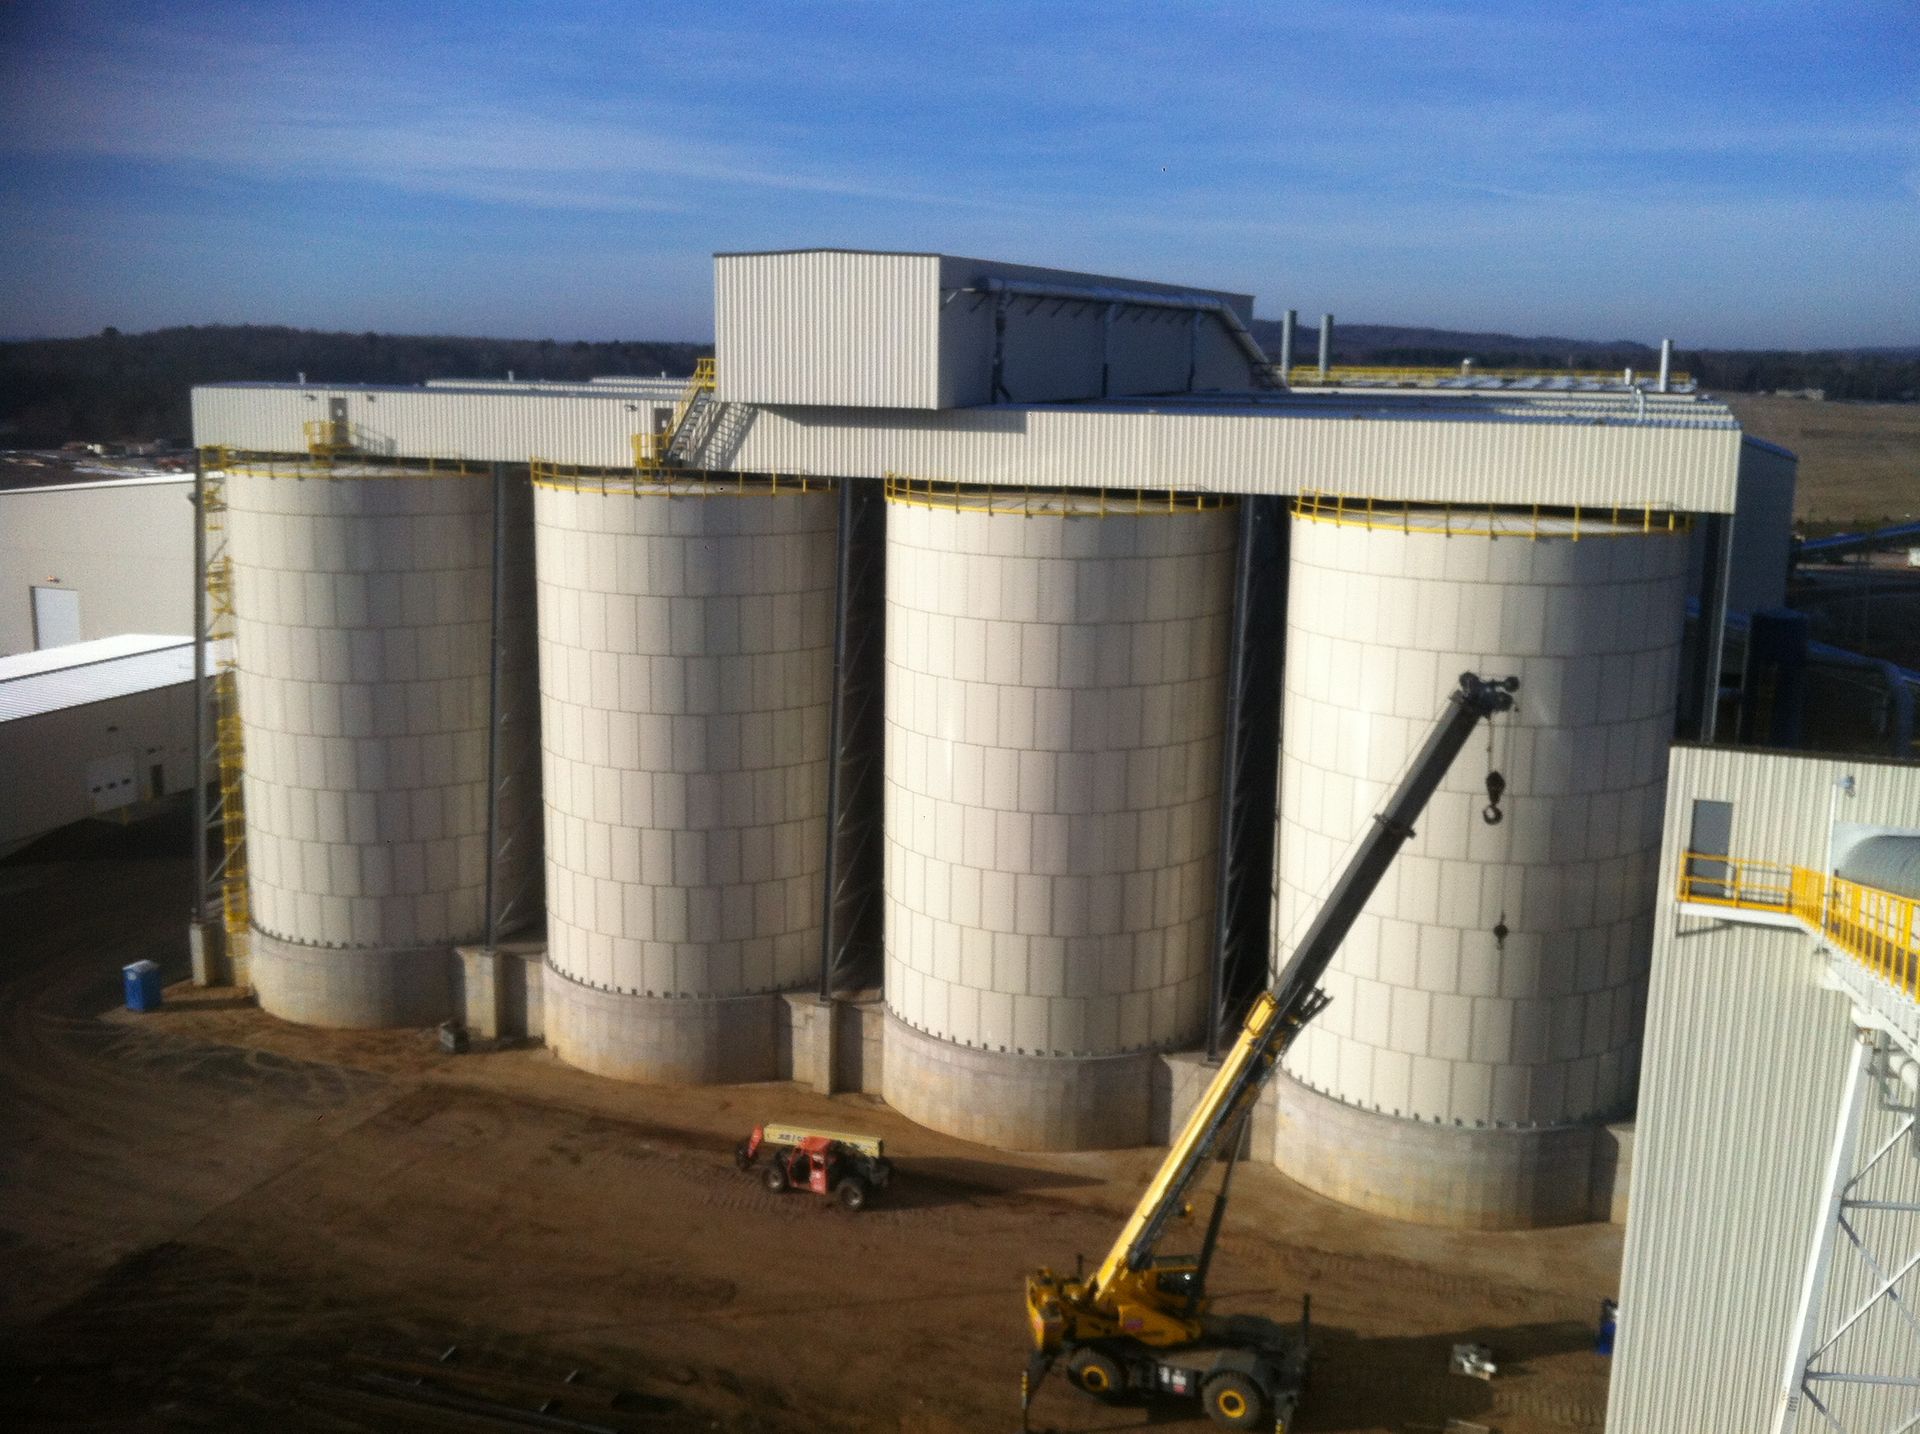 CHIPPEWA FALLS, WISCONSIN Frac Sand Processing and Distribution Facility